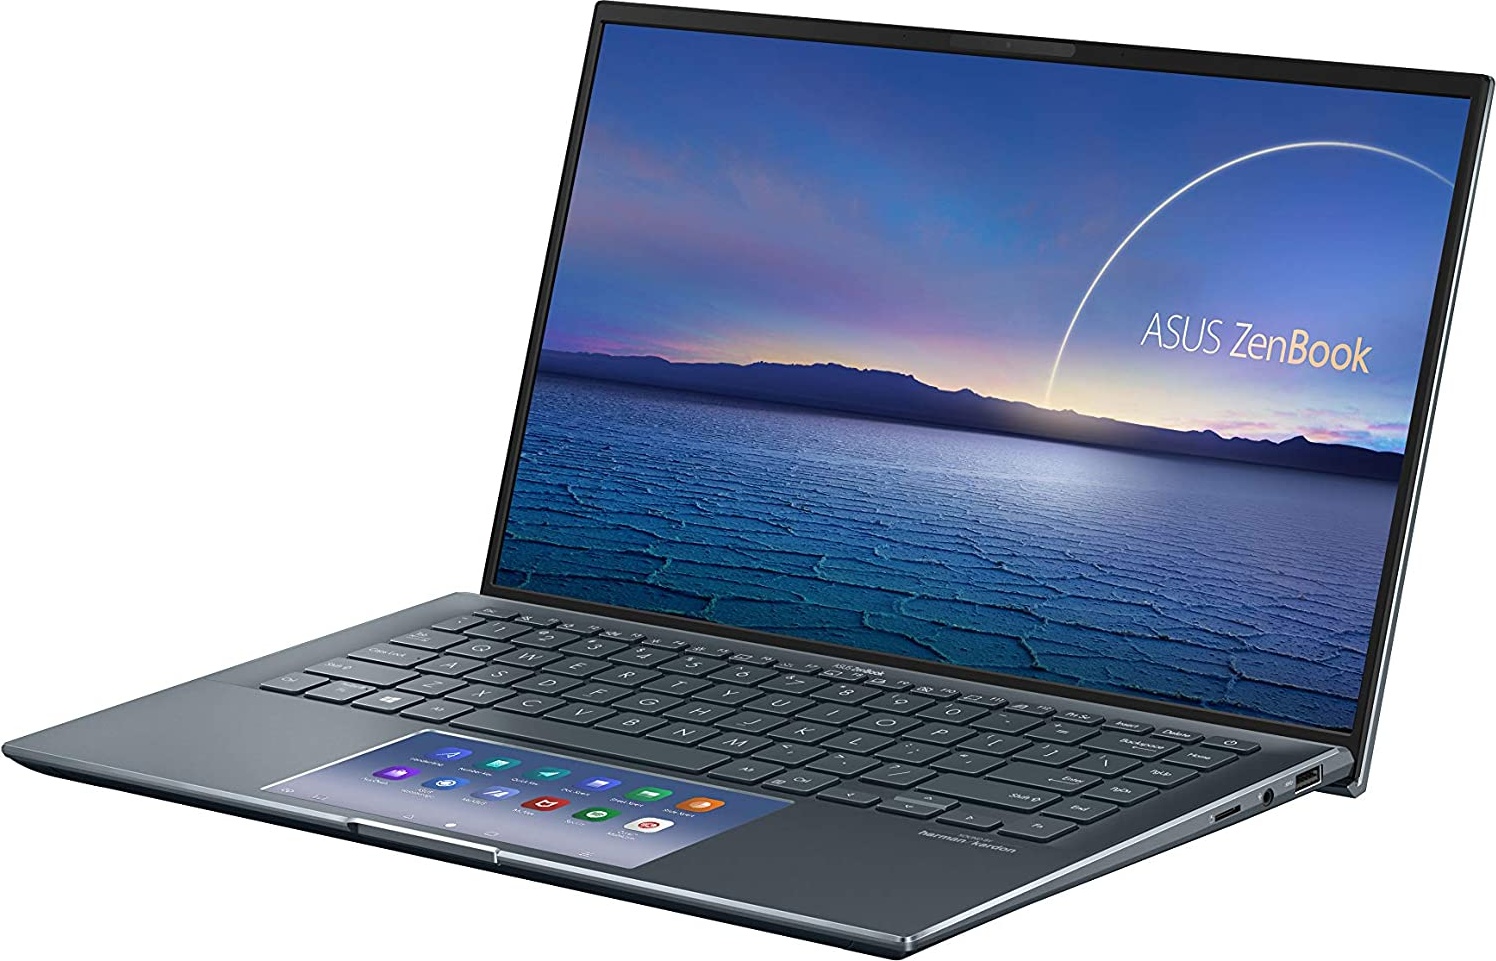 ASUS ZenBook 14 Ultra-Slim Laptop 14” FHD NanoEdge Bezel Display, Intel Core i7-1165G7, NVIDIA MX450, 16GB RAM, 512GB SSD, ScreenPad 2.0, Thunderbolt 4, Windows 10 Pro, Pine Grey, UX435EG-XH74